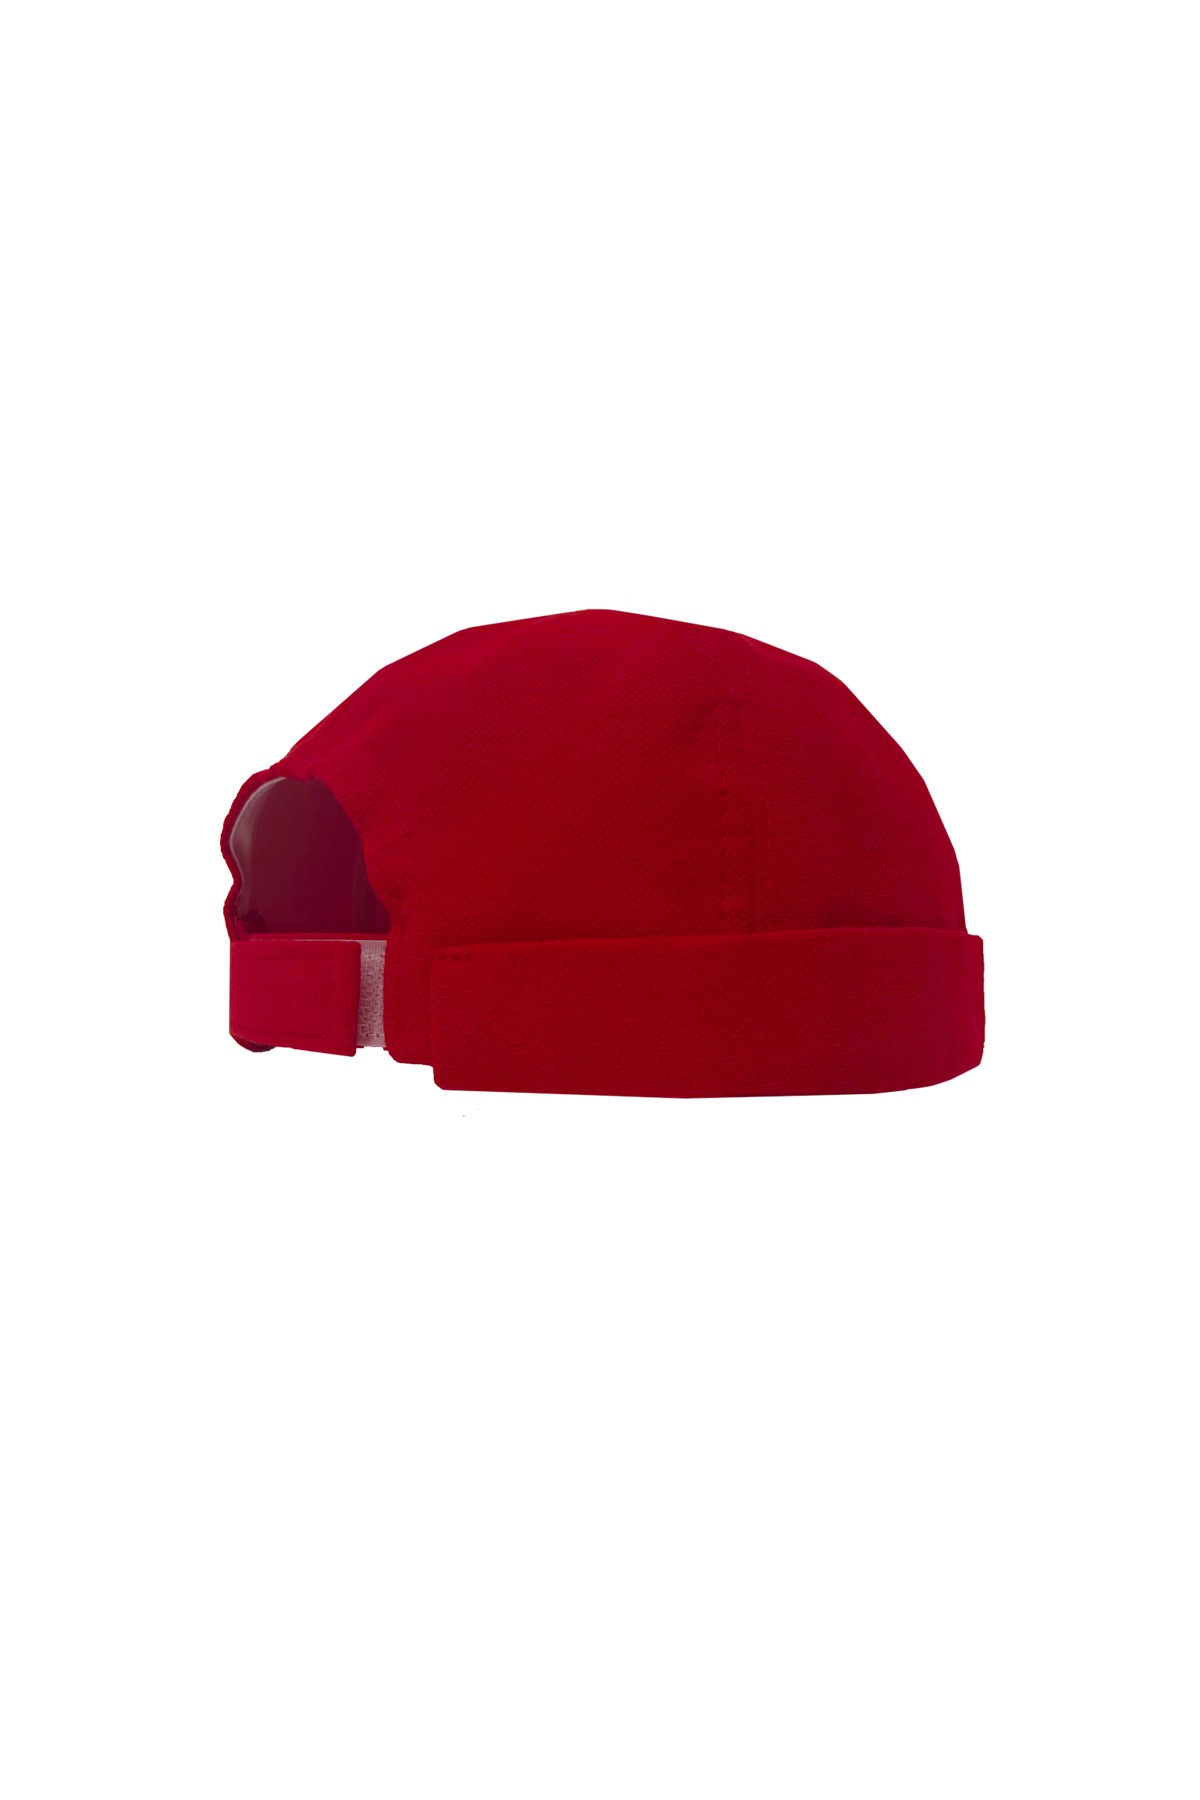 Nuo - Brimless Cap - RED